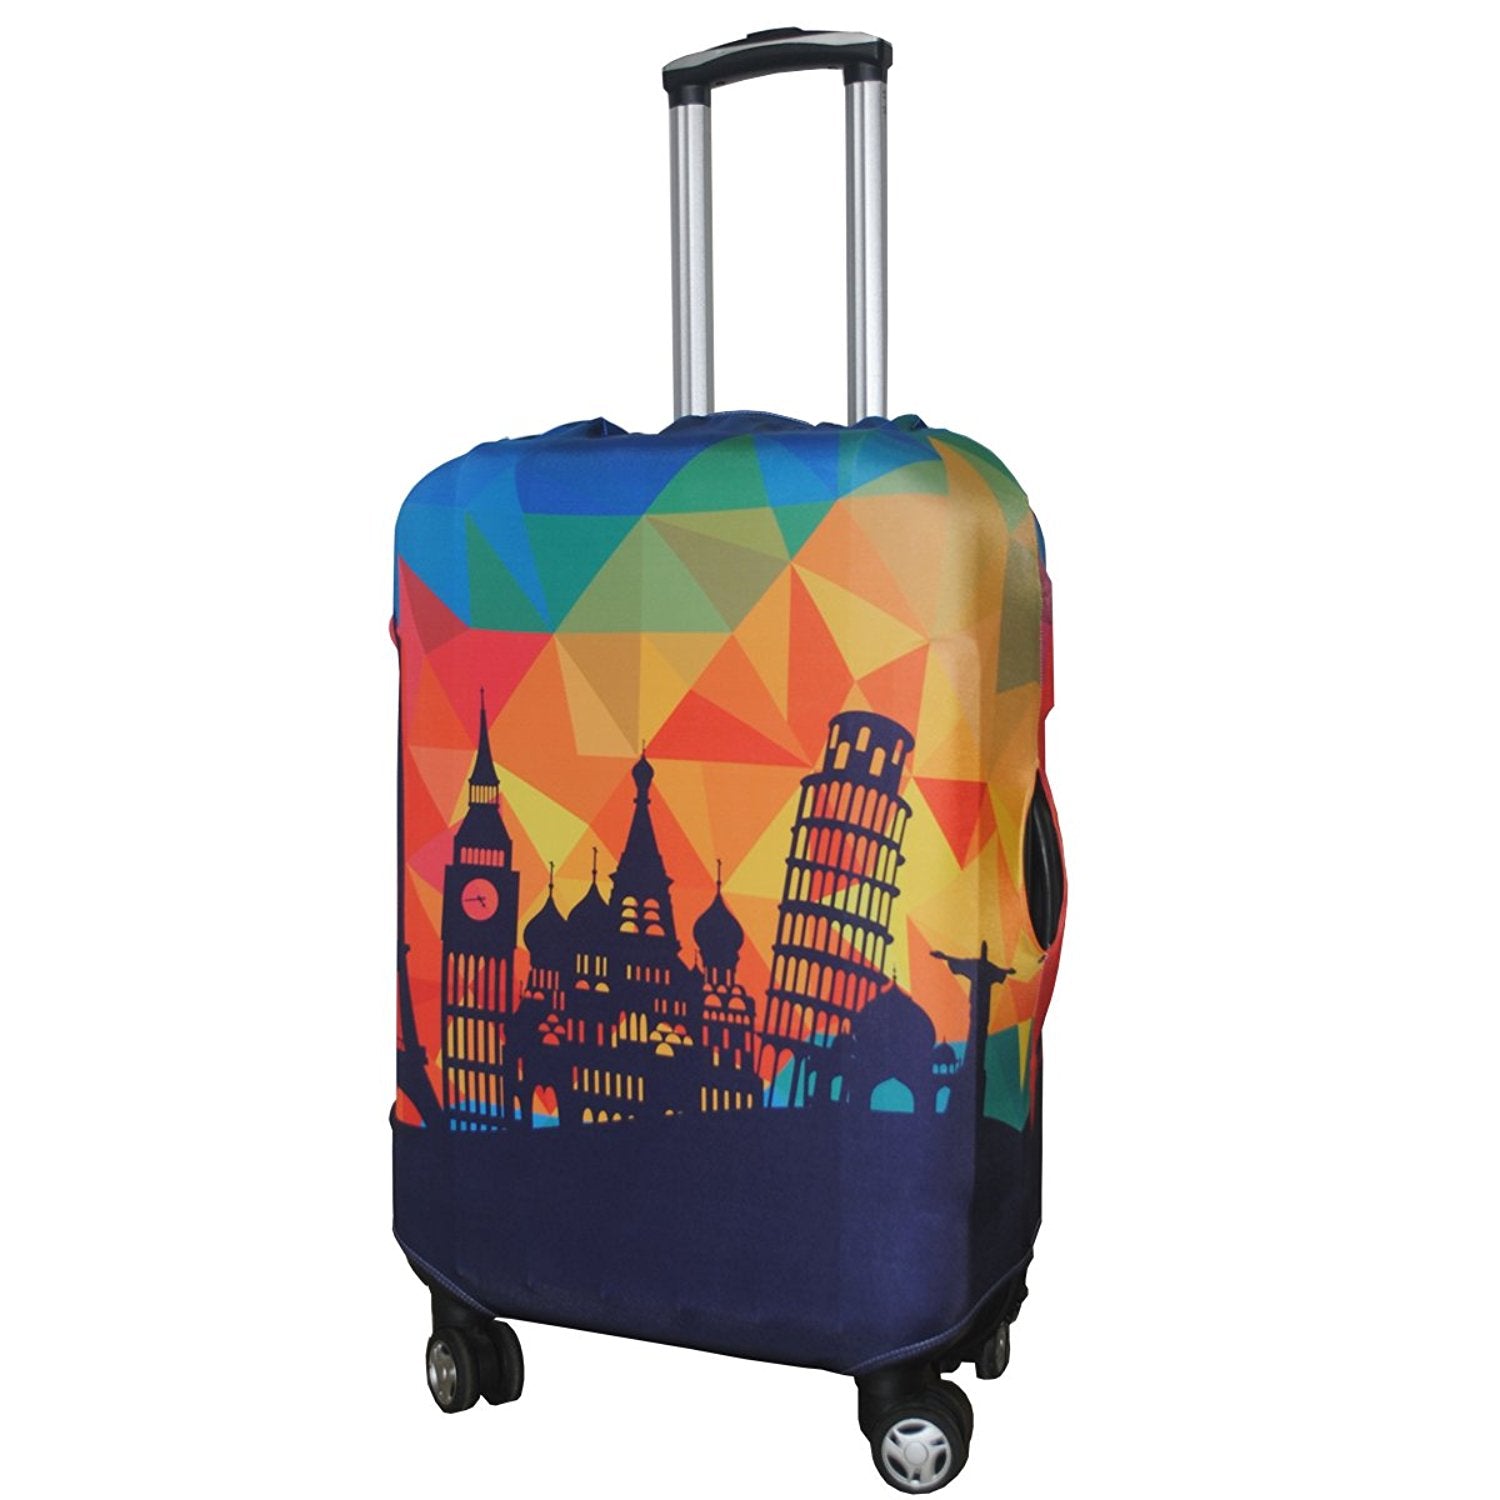 Explore Land Luggage Cover Fits 18-32 Inch Luggage – EASONE LLC